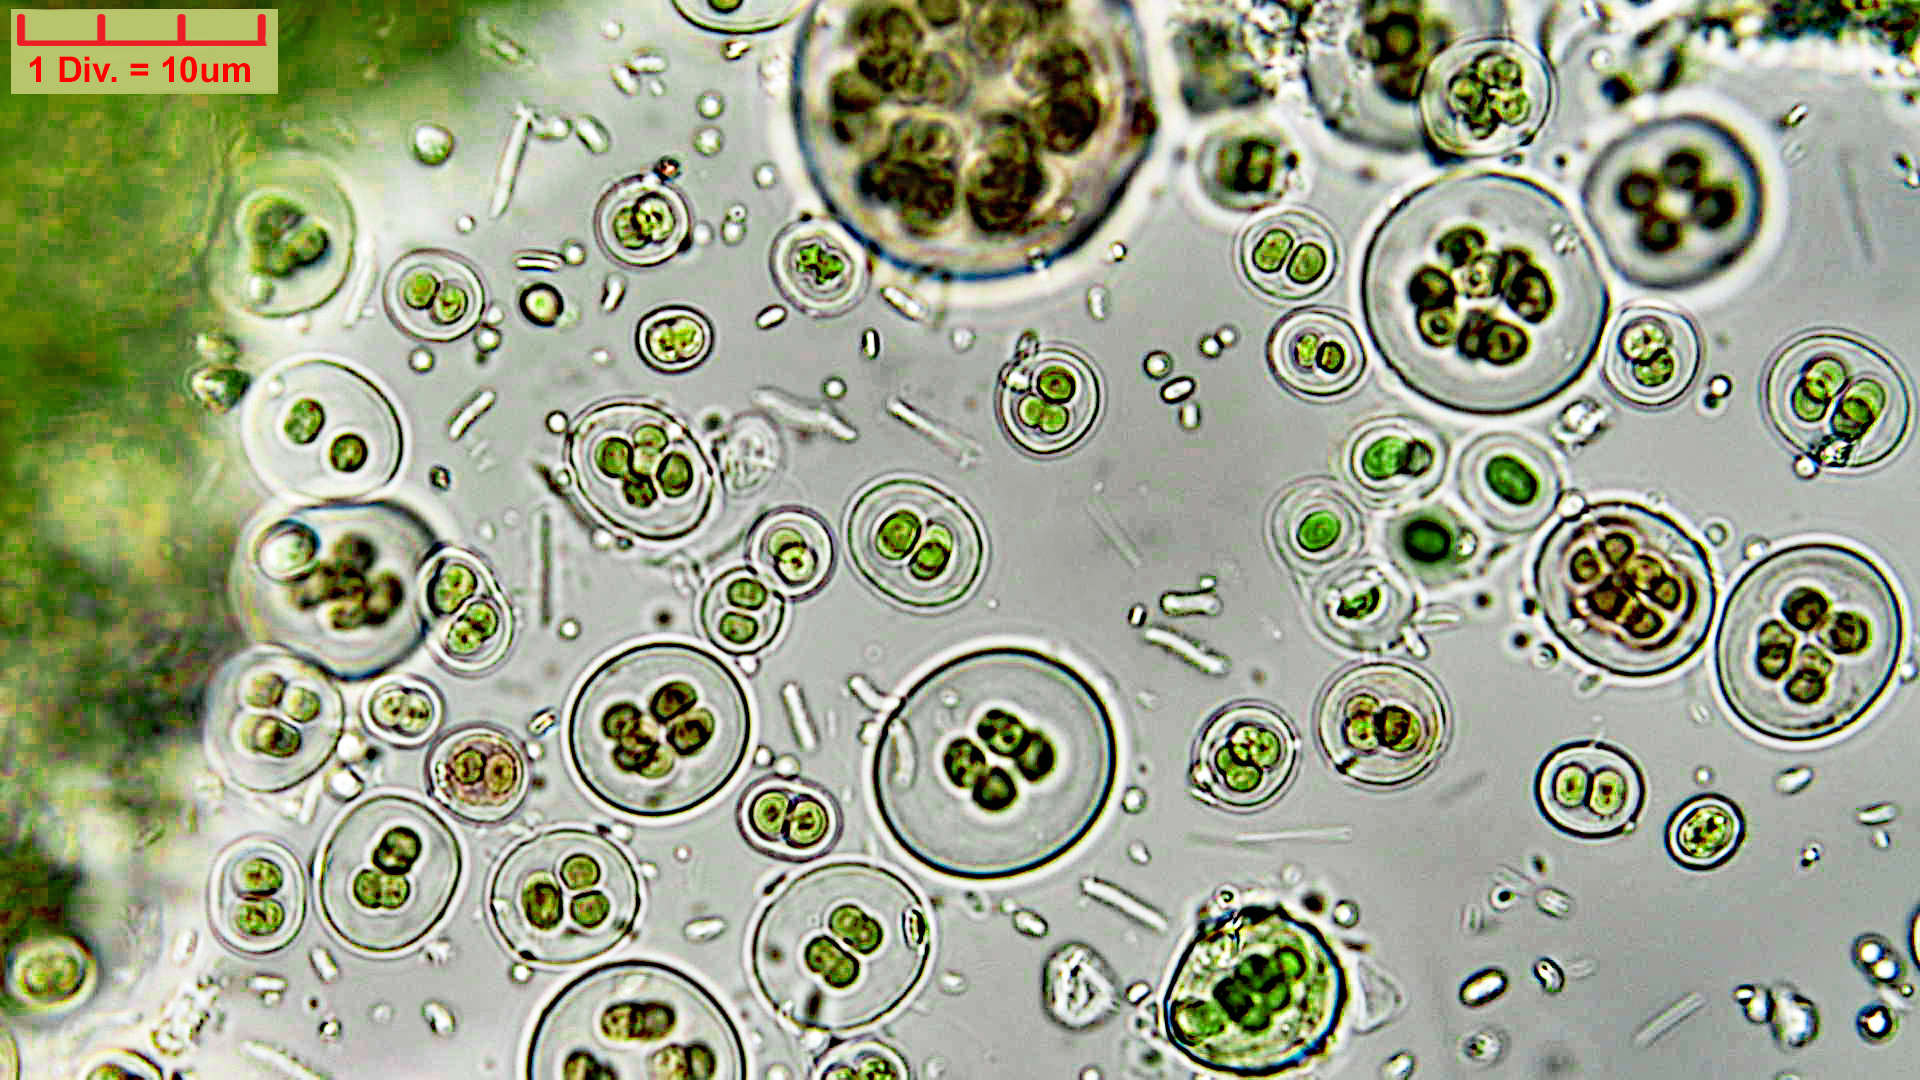 ././Cyanobacteria/Chroococcales/Chroococcaceae/Gloeocapsa/atrata/gloeocapsa-atrata-31.jpg